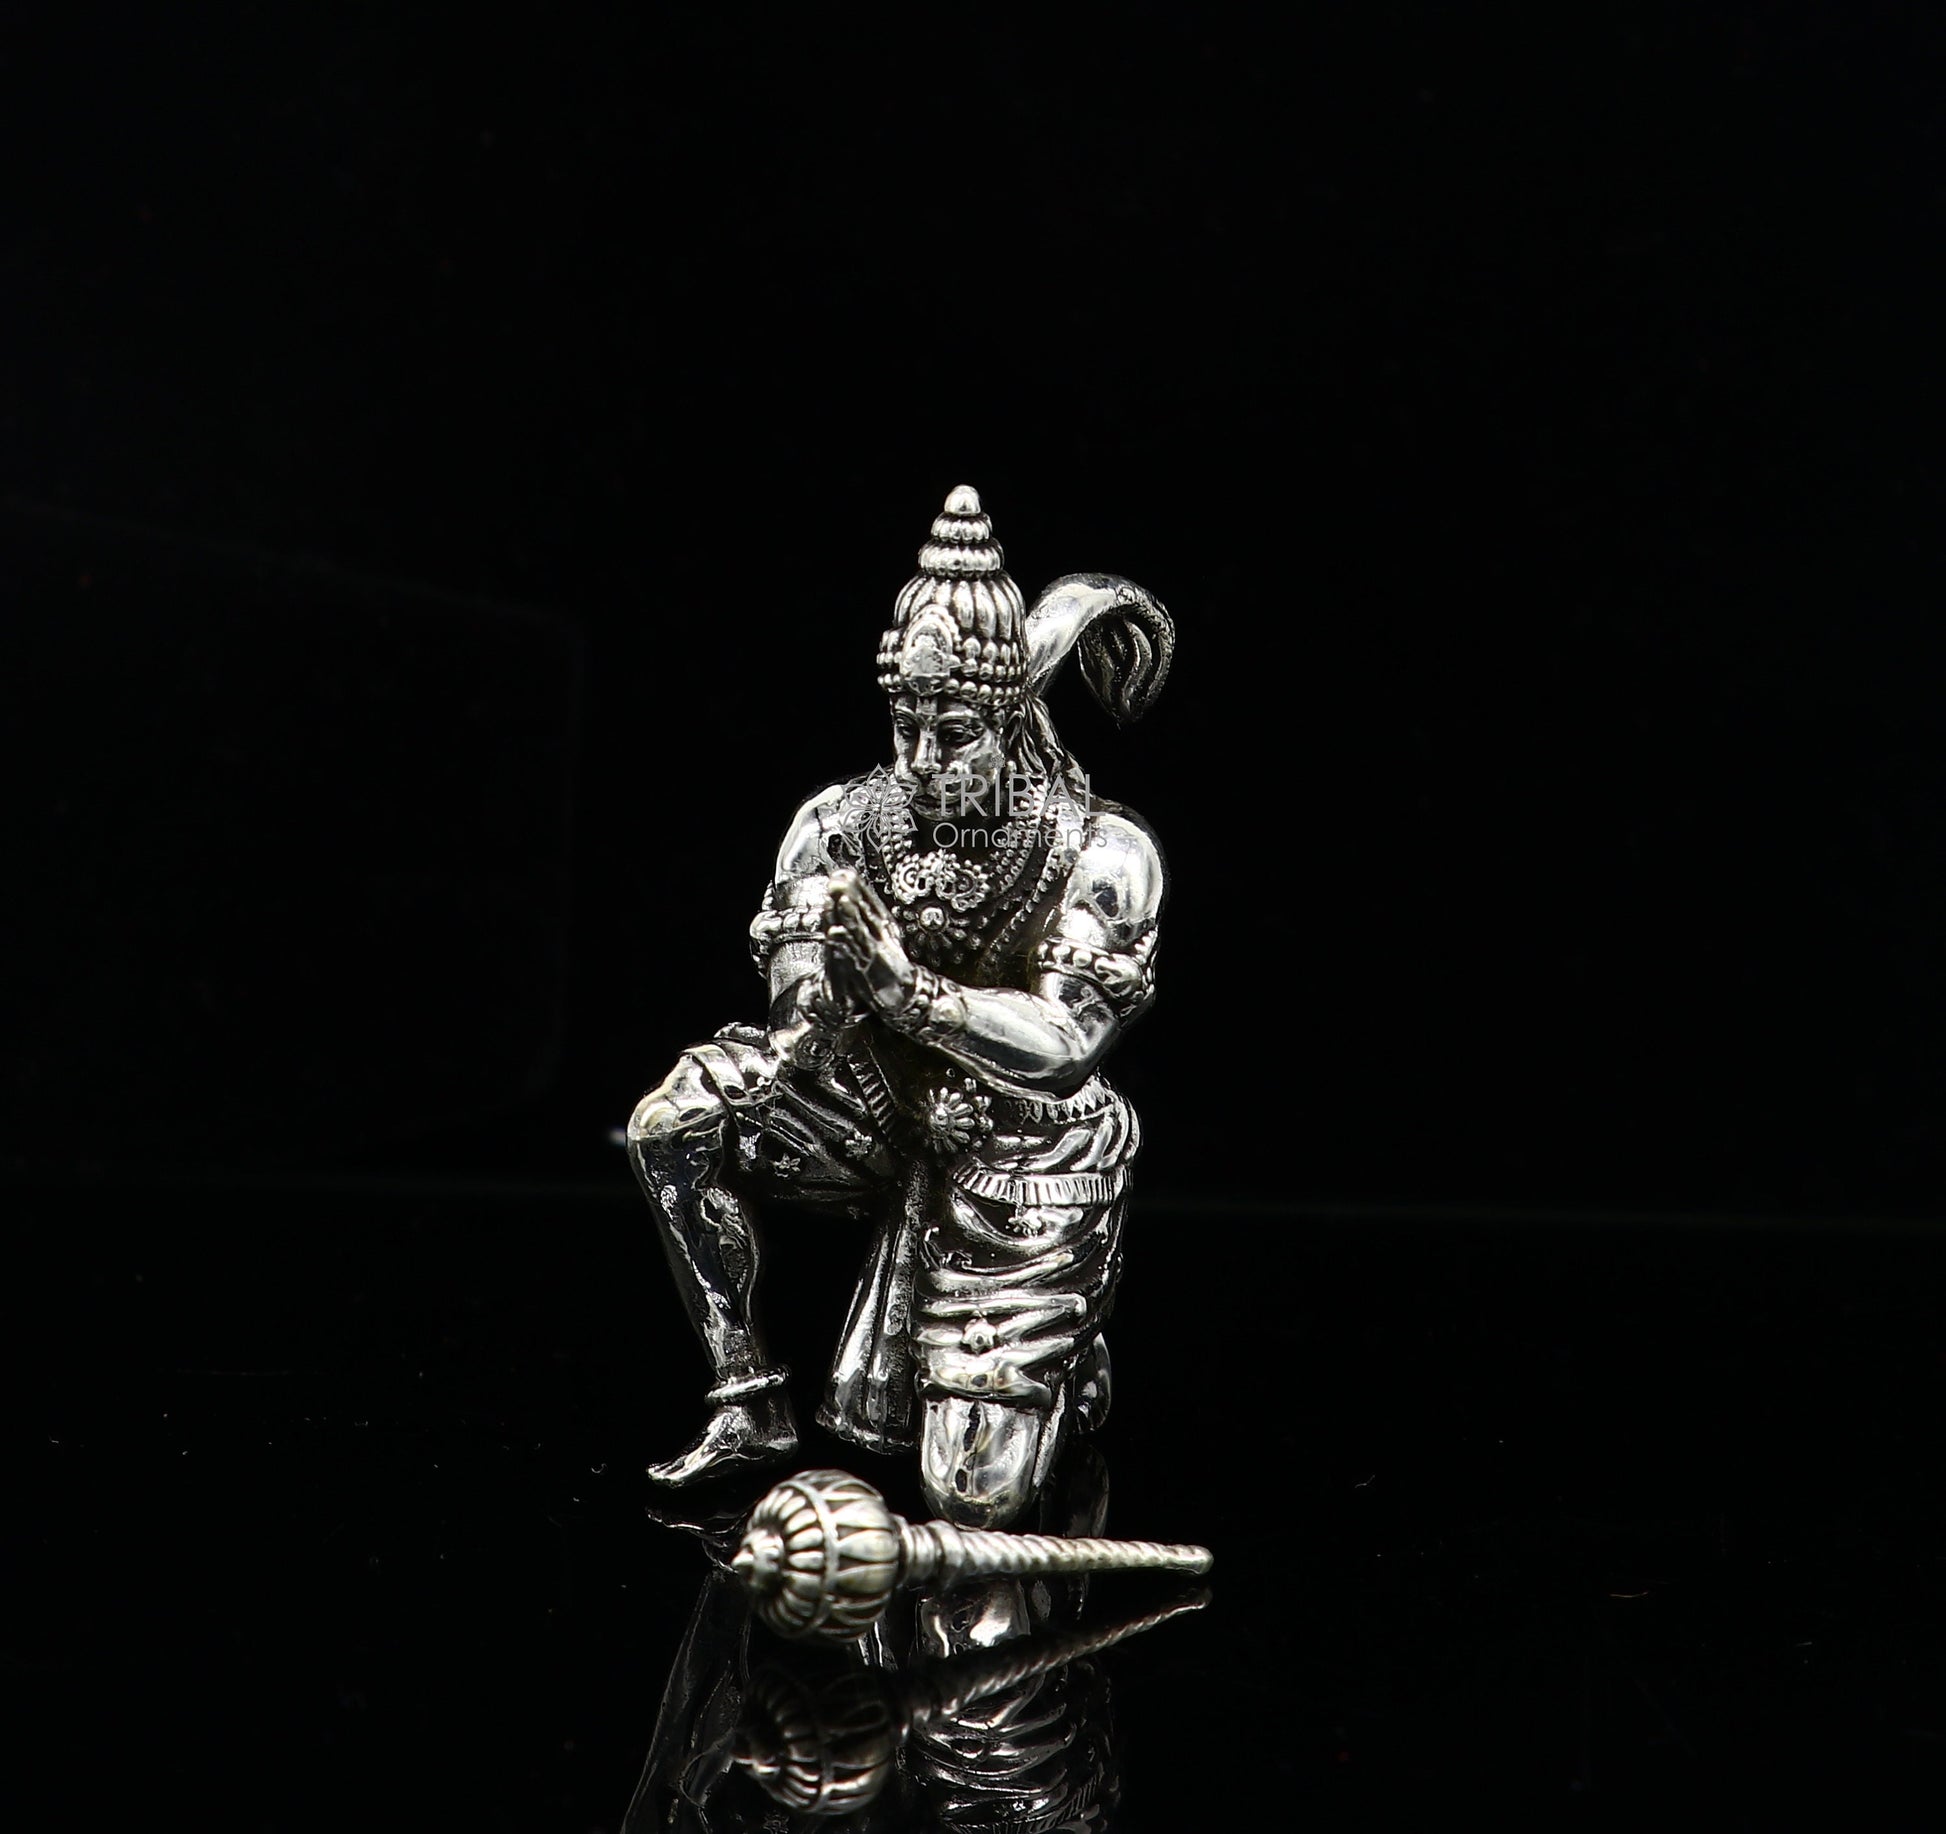 2.0" 925 silver handmade Lord hanuman statue, best puja or gifting god hanuman statue sculpture home temple puja art figurine art620 - TRIBAL ORNAMENTS